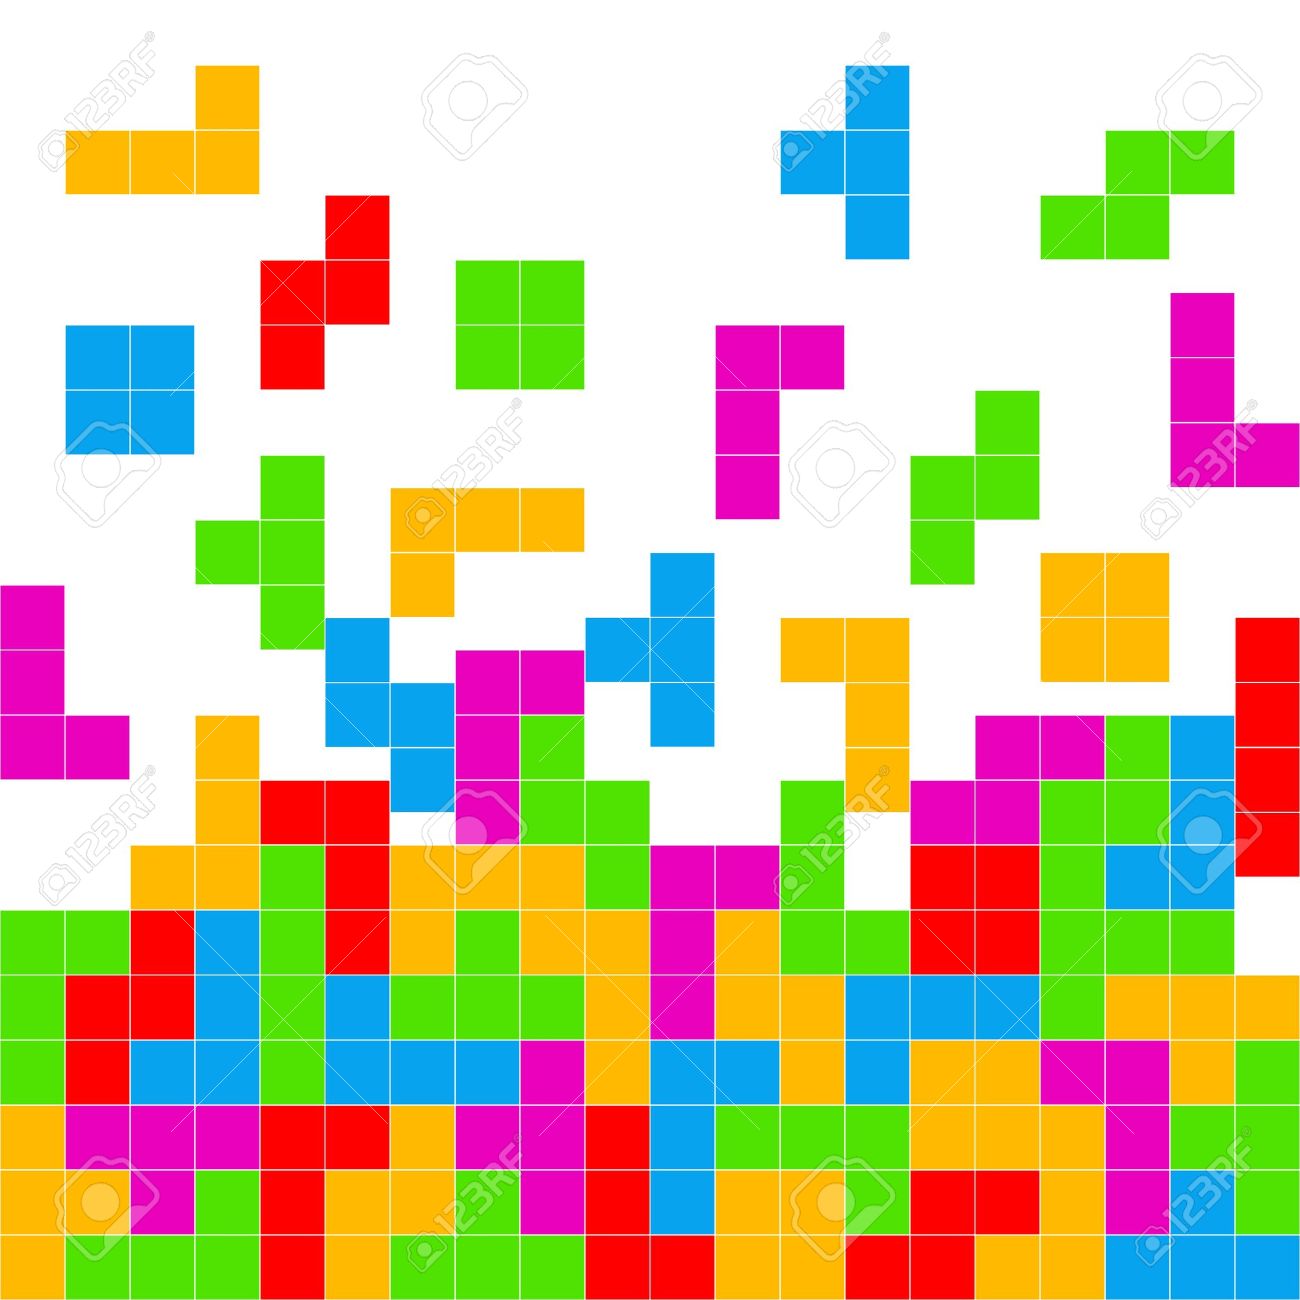 Tetris Game Free